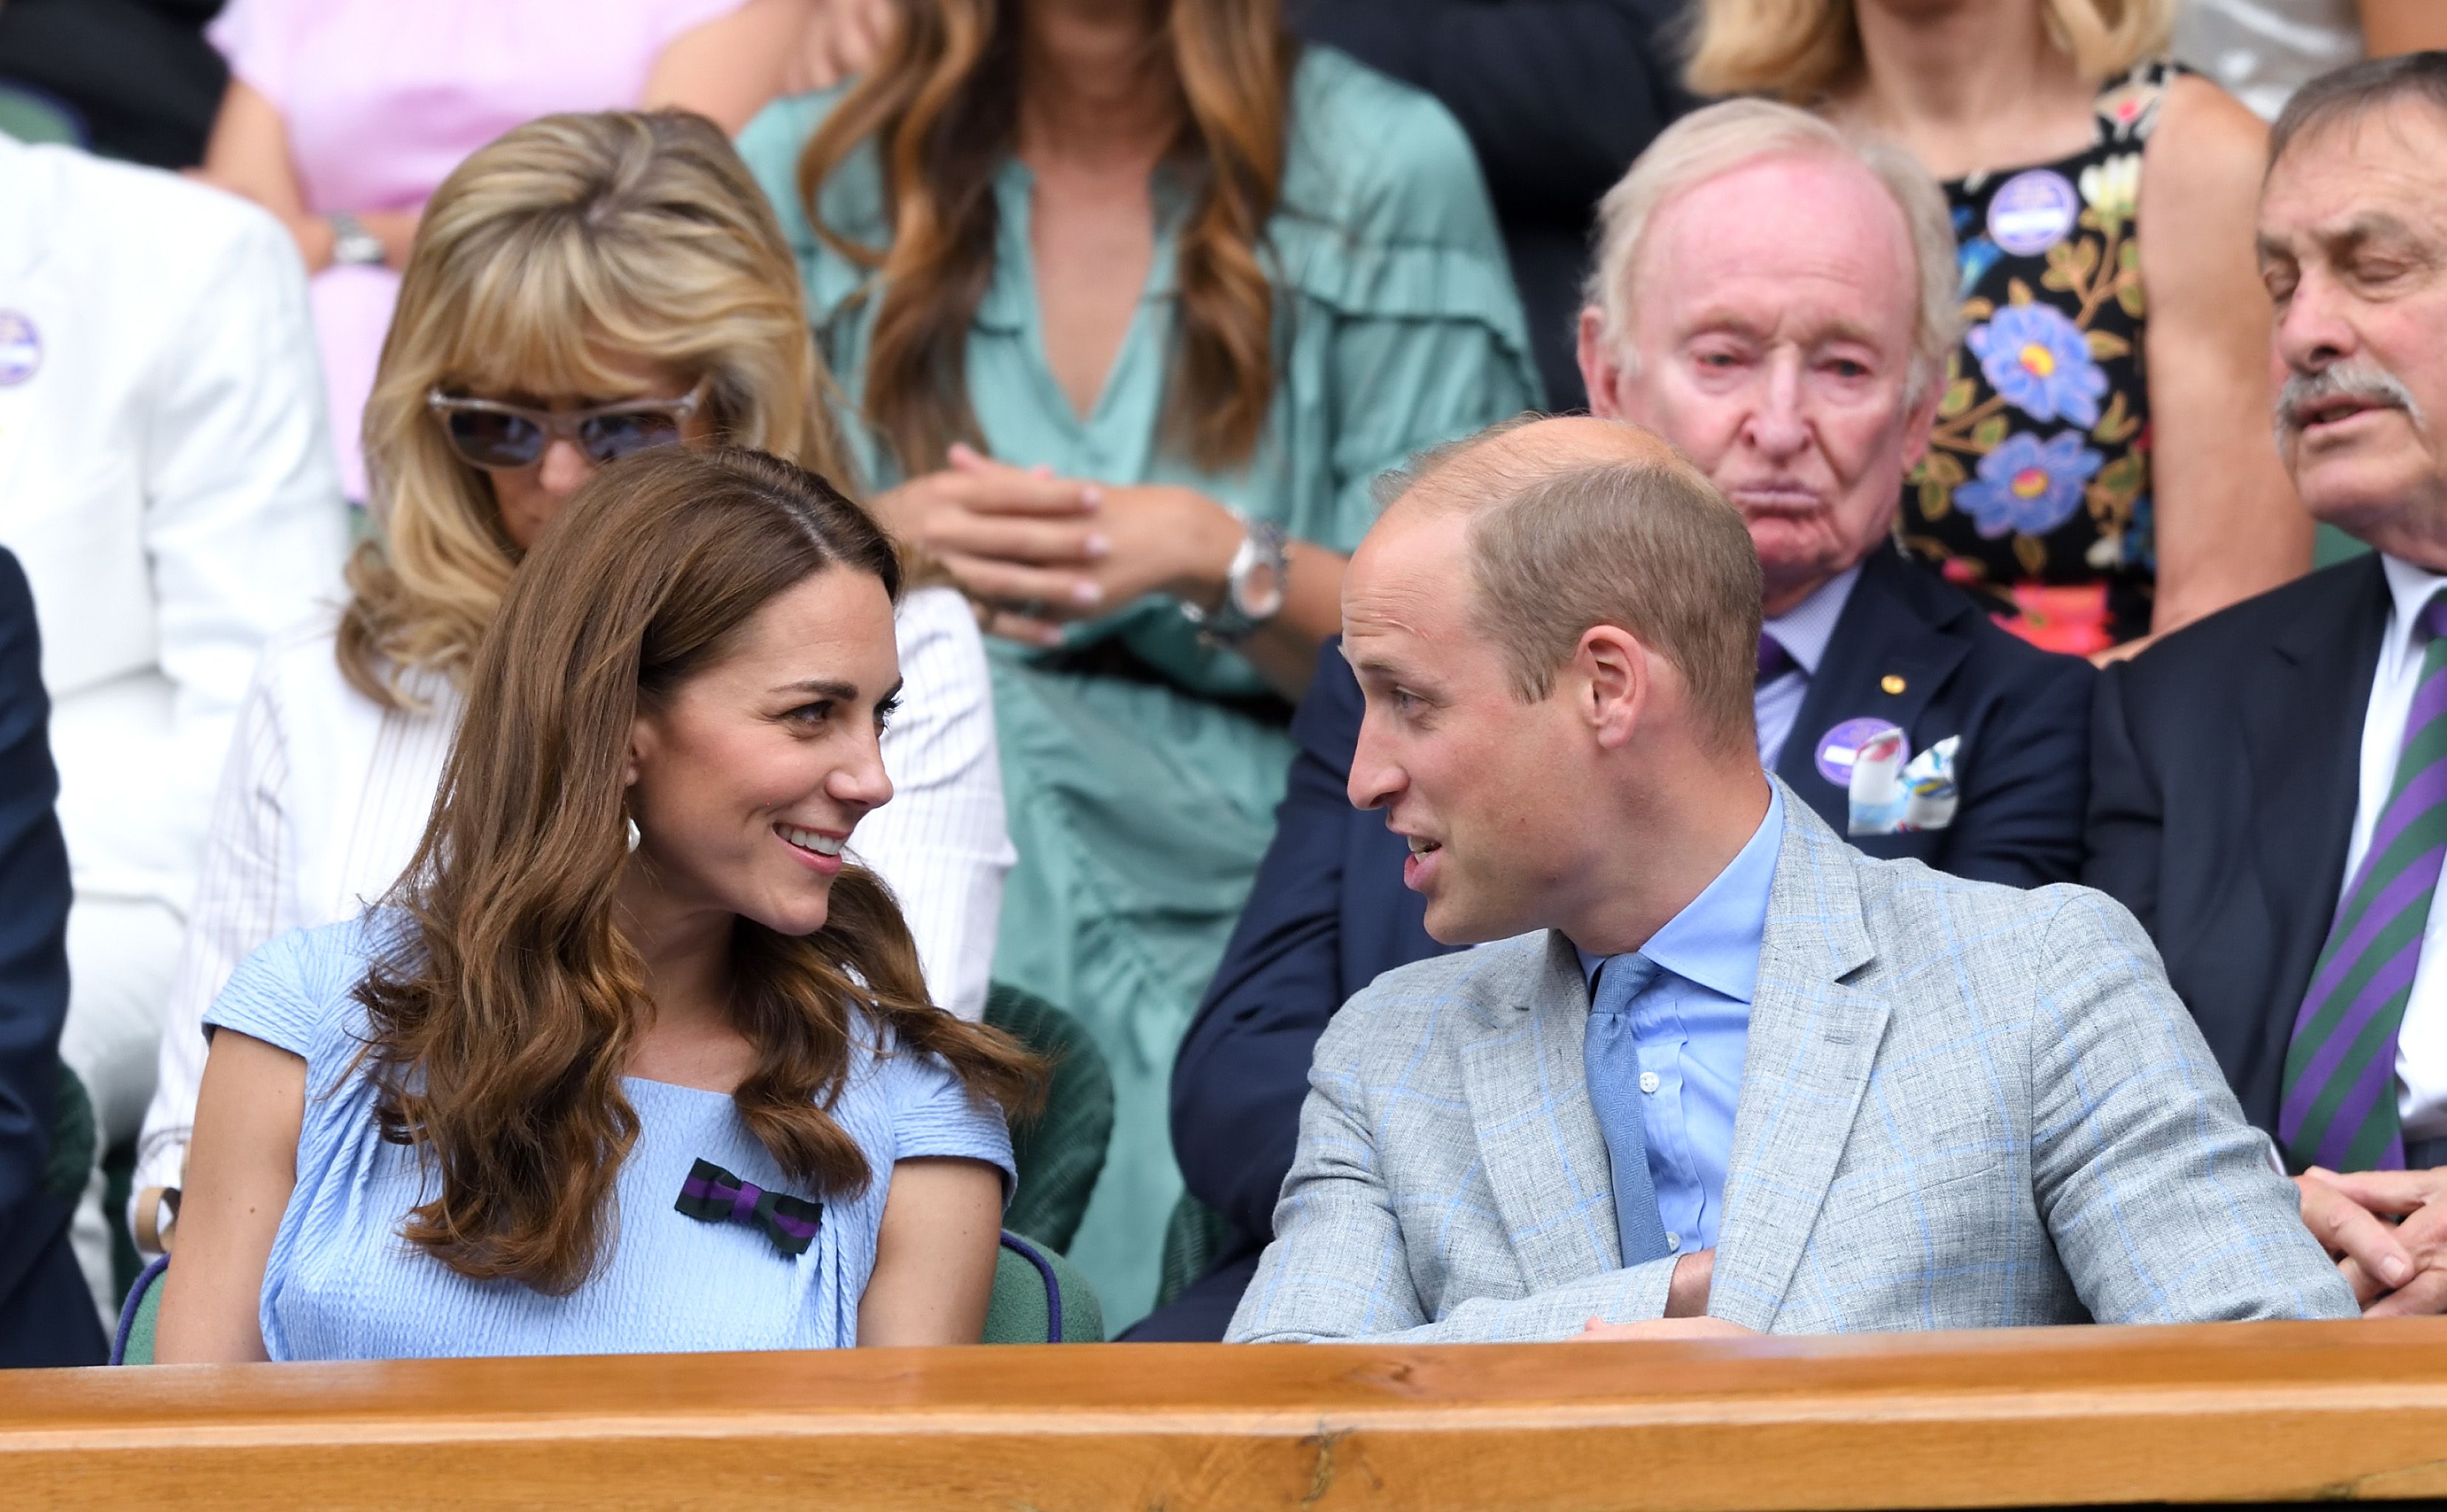 Billy ged Skab camouflage Kate Middleton, Prince William Body Language After Rose Hanbury Scandal